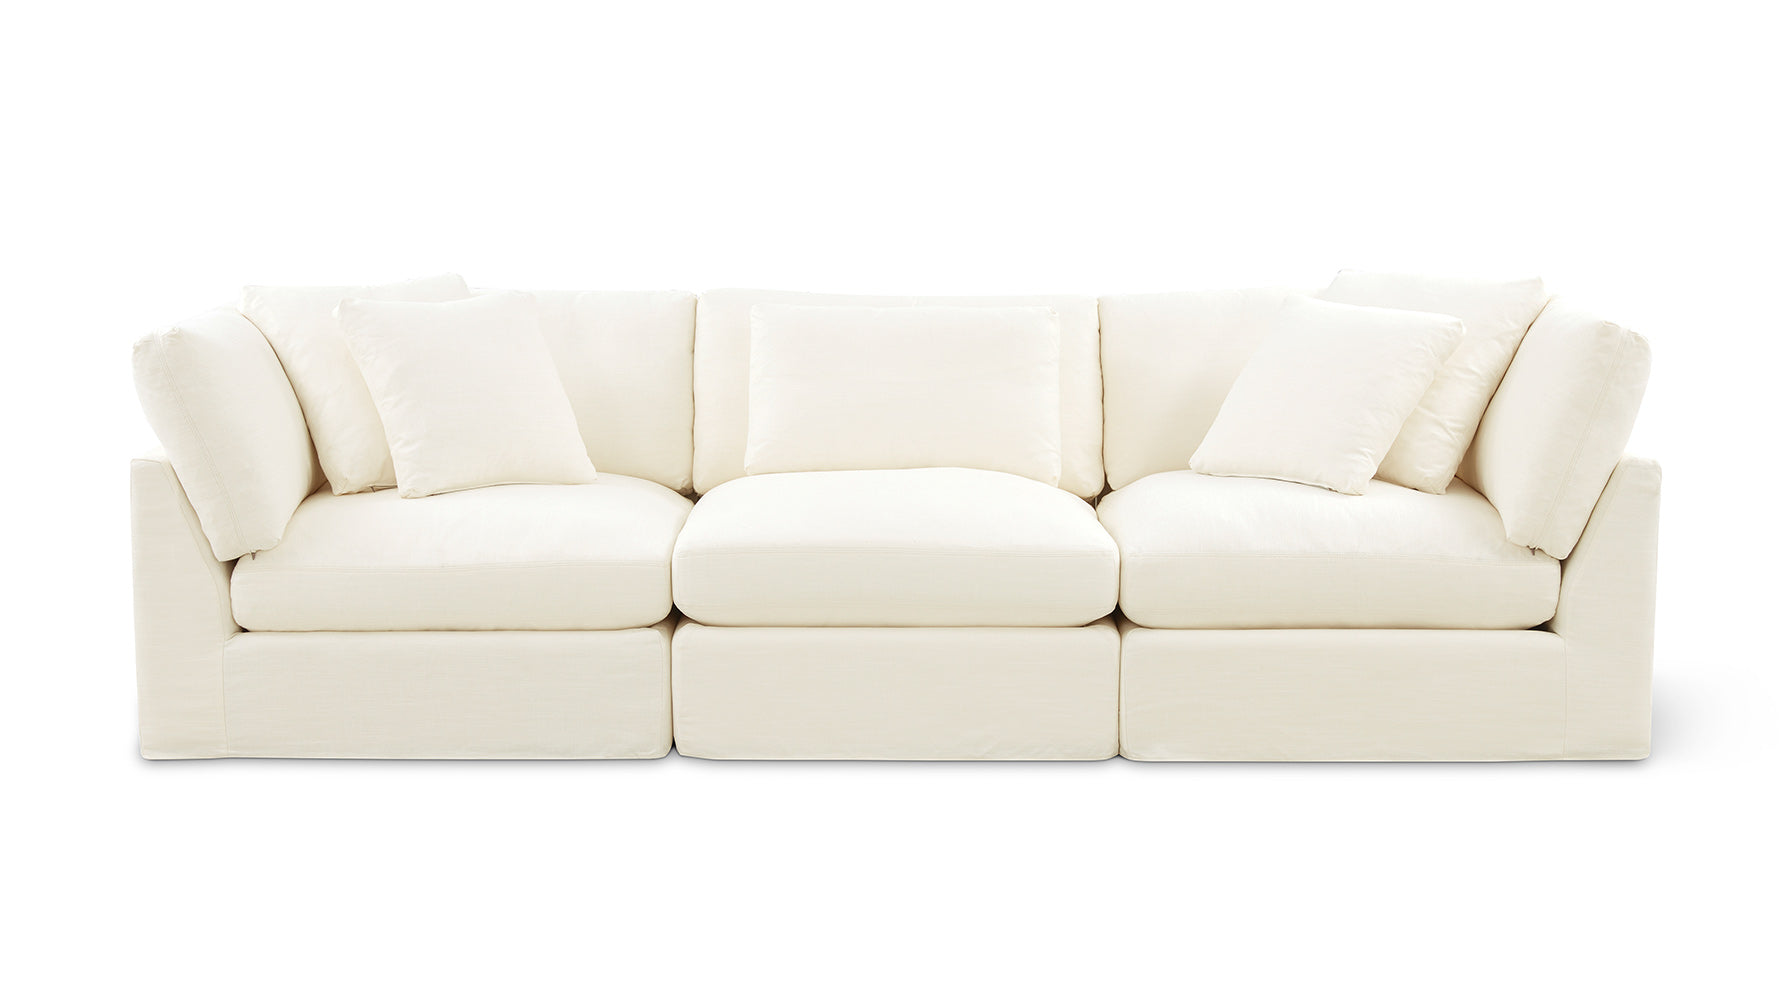 Get Together™ 3-Piece Modular Sofa, Large, Cream Linen - Image 1